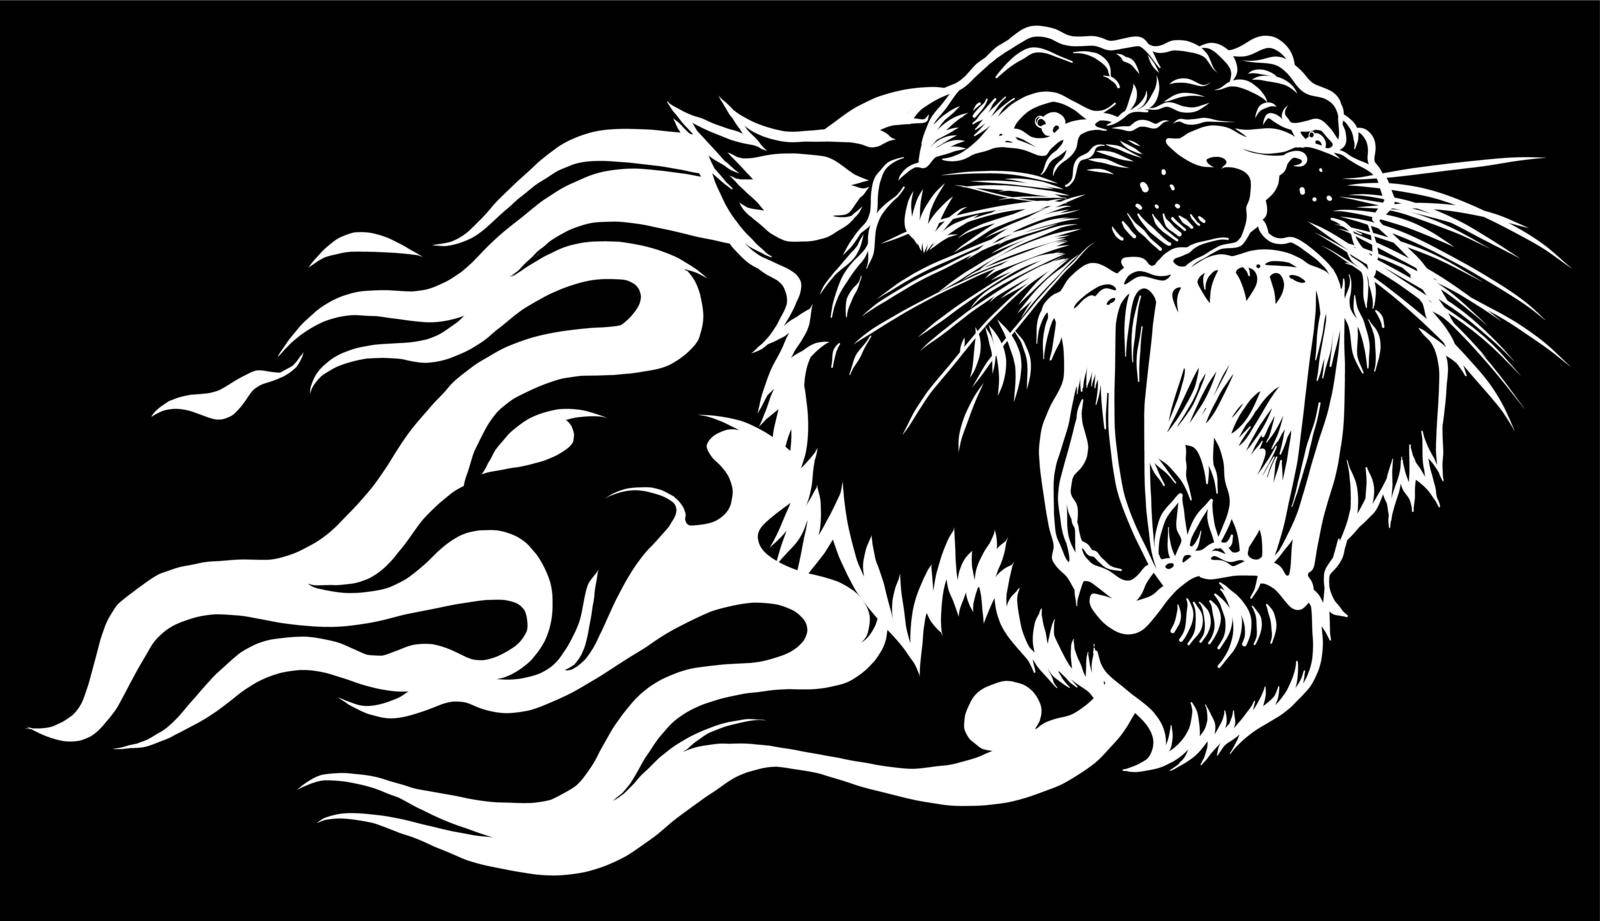 Jaguar or cougar predator head flame. Vector illustration.